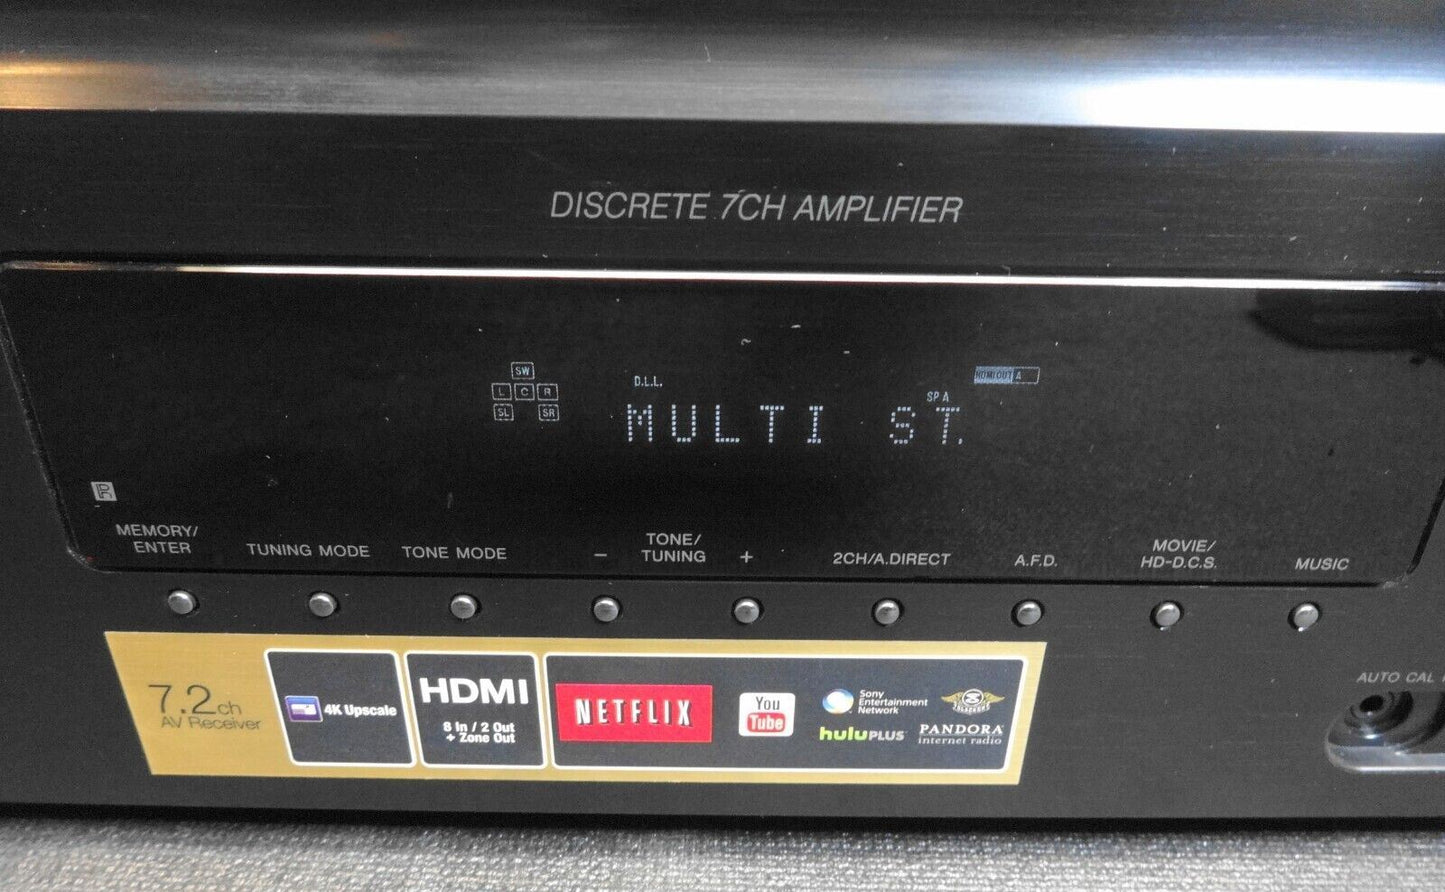 Sony STR-DA2800ES Discrete 7CH Amplifier Multi Channel AV Receiver AC 120V~60Hz